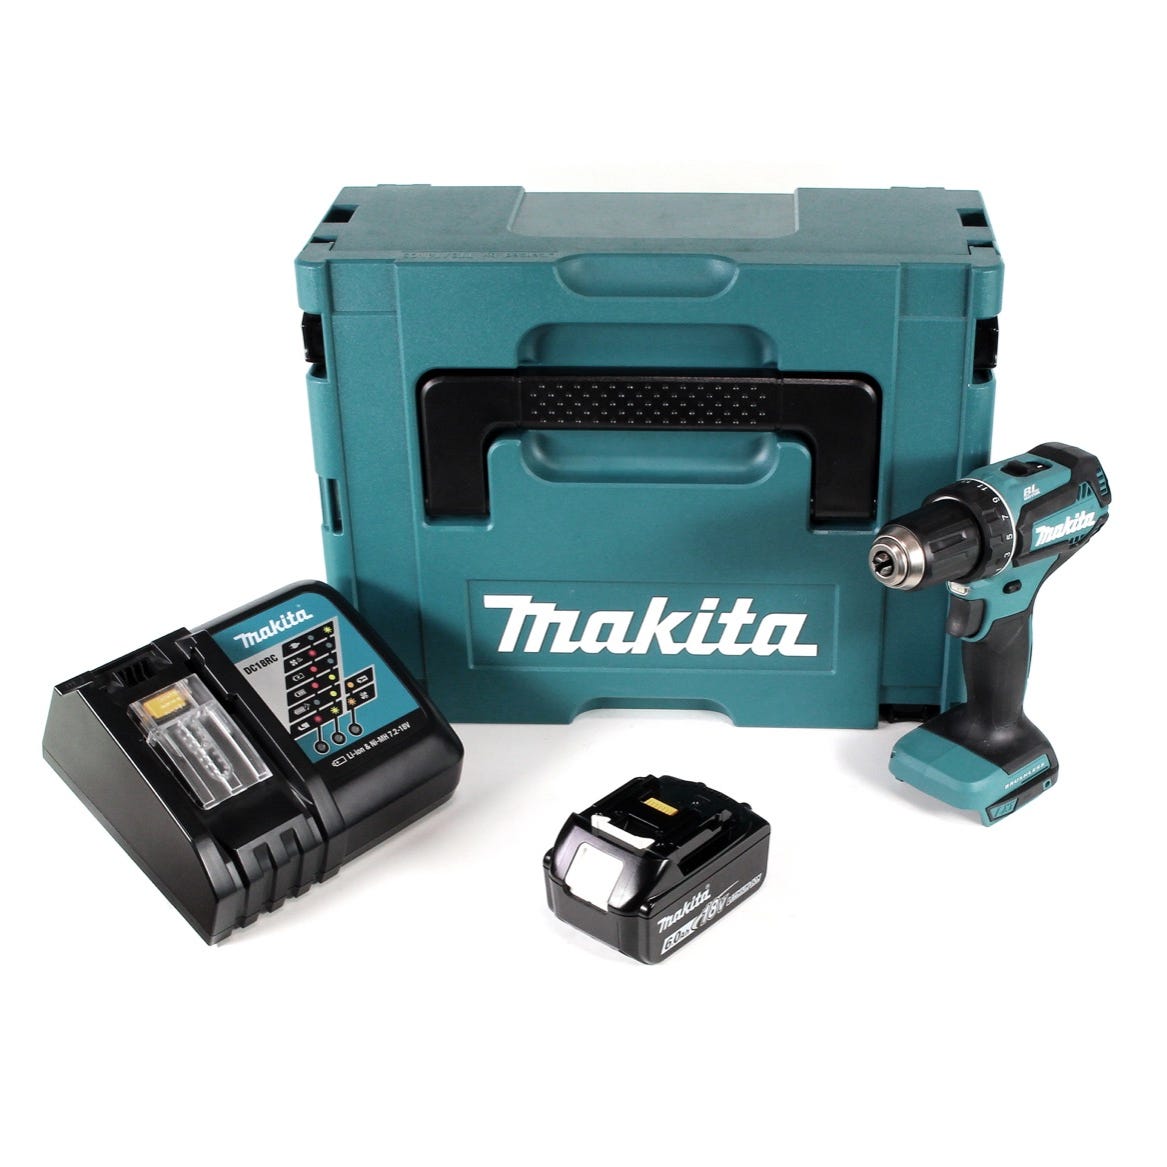 Makita DDF 485 RG1J 18 V Li-Ion Perceuse visseuse sans fil Brushless 13 mm + Coffret MakPac + 1 x Batterie 6,0 Ah + Chargeur 0